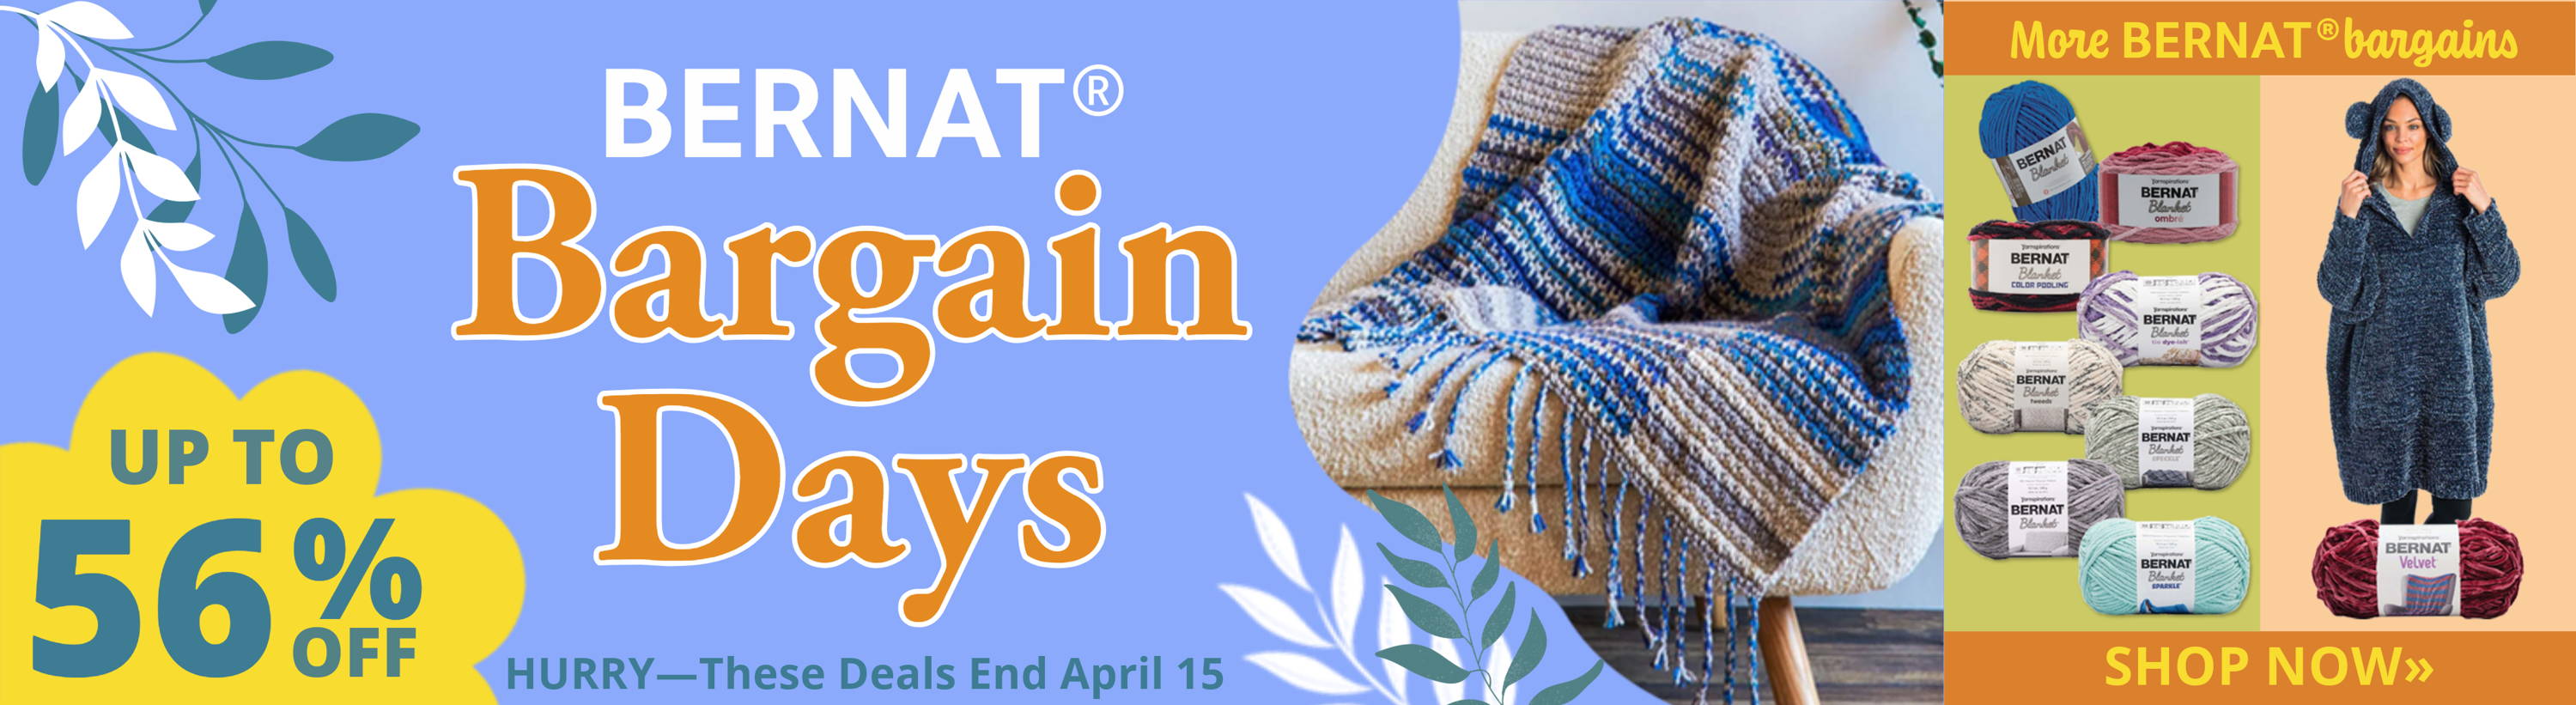 Bernat® Bargain Days. Up to 56% off Bernat® Yarns & Kits until April 15. Images: Bernat® Sale Yarns & Kits.